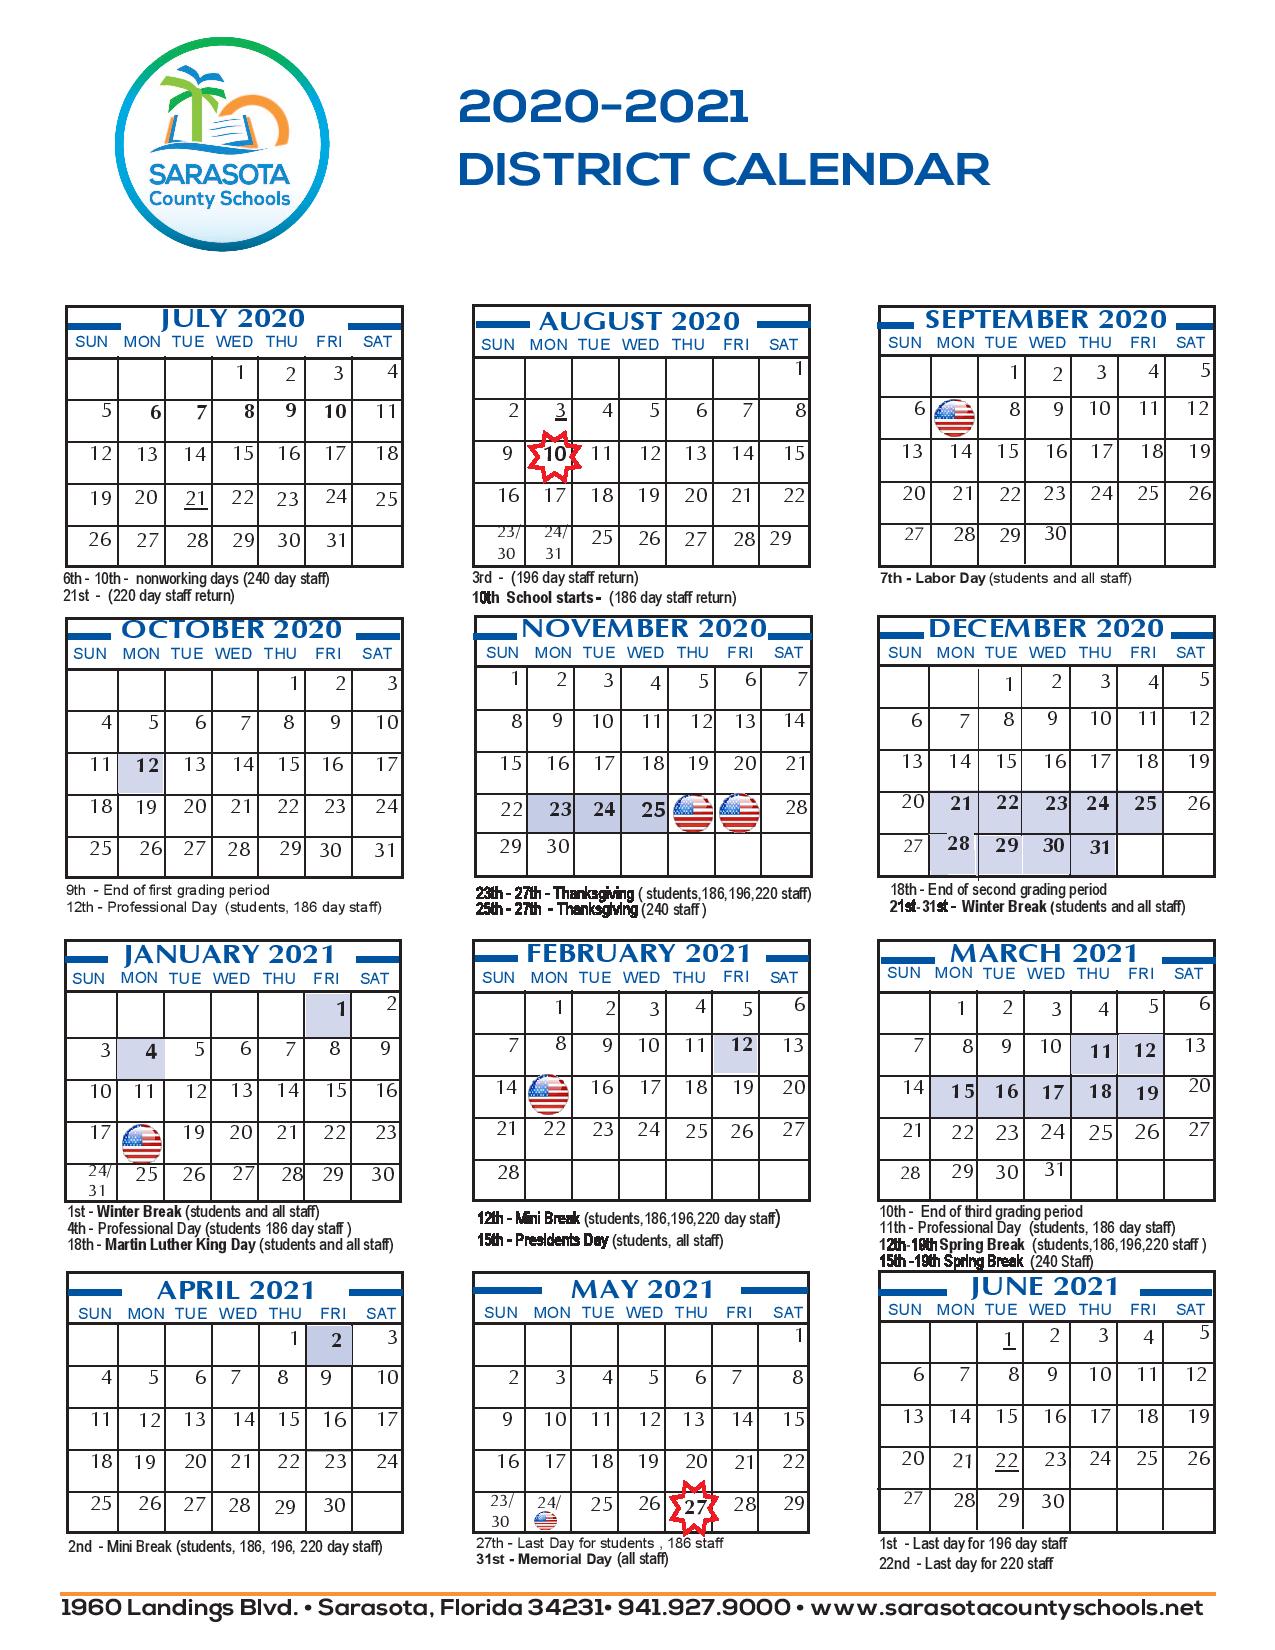 Pinellas County School Calendar 2021-2022 Sarasota County School Calendar 2020 2021 in PDF Format